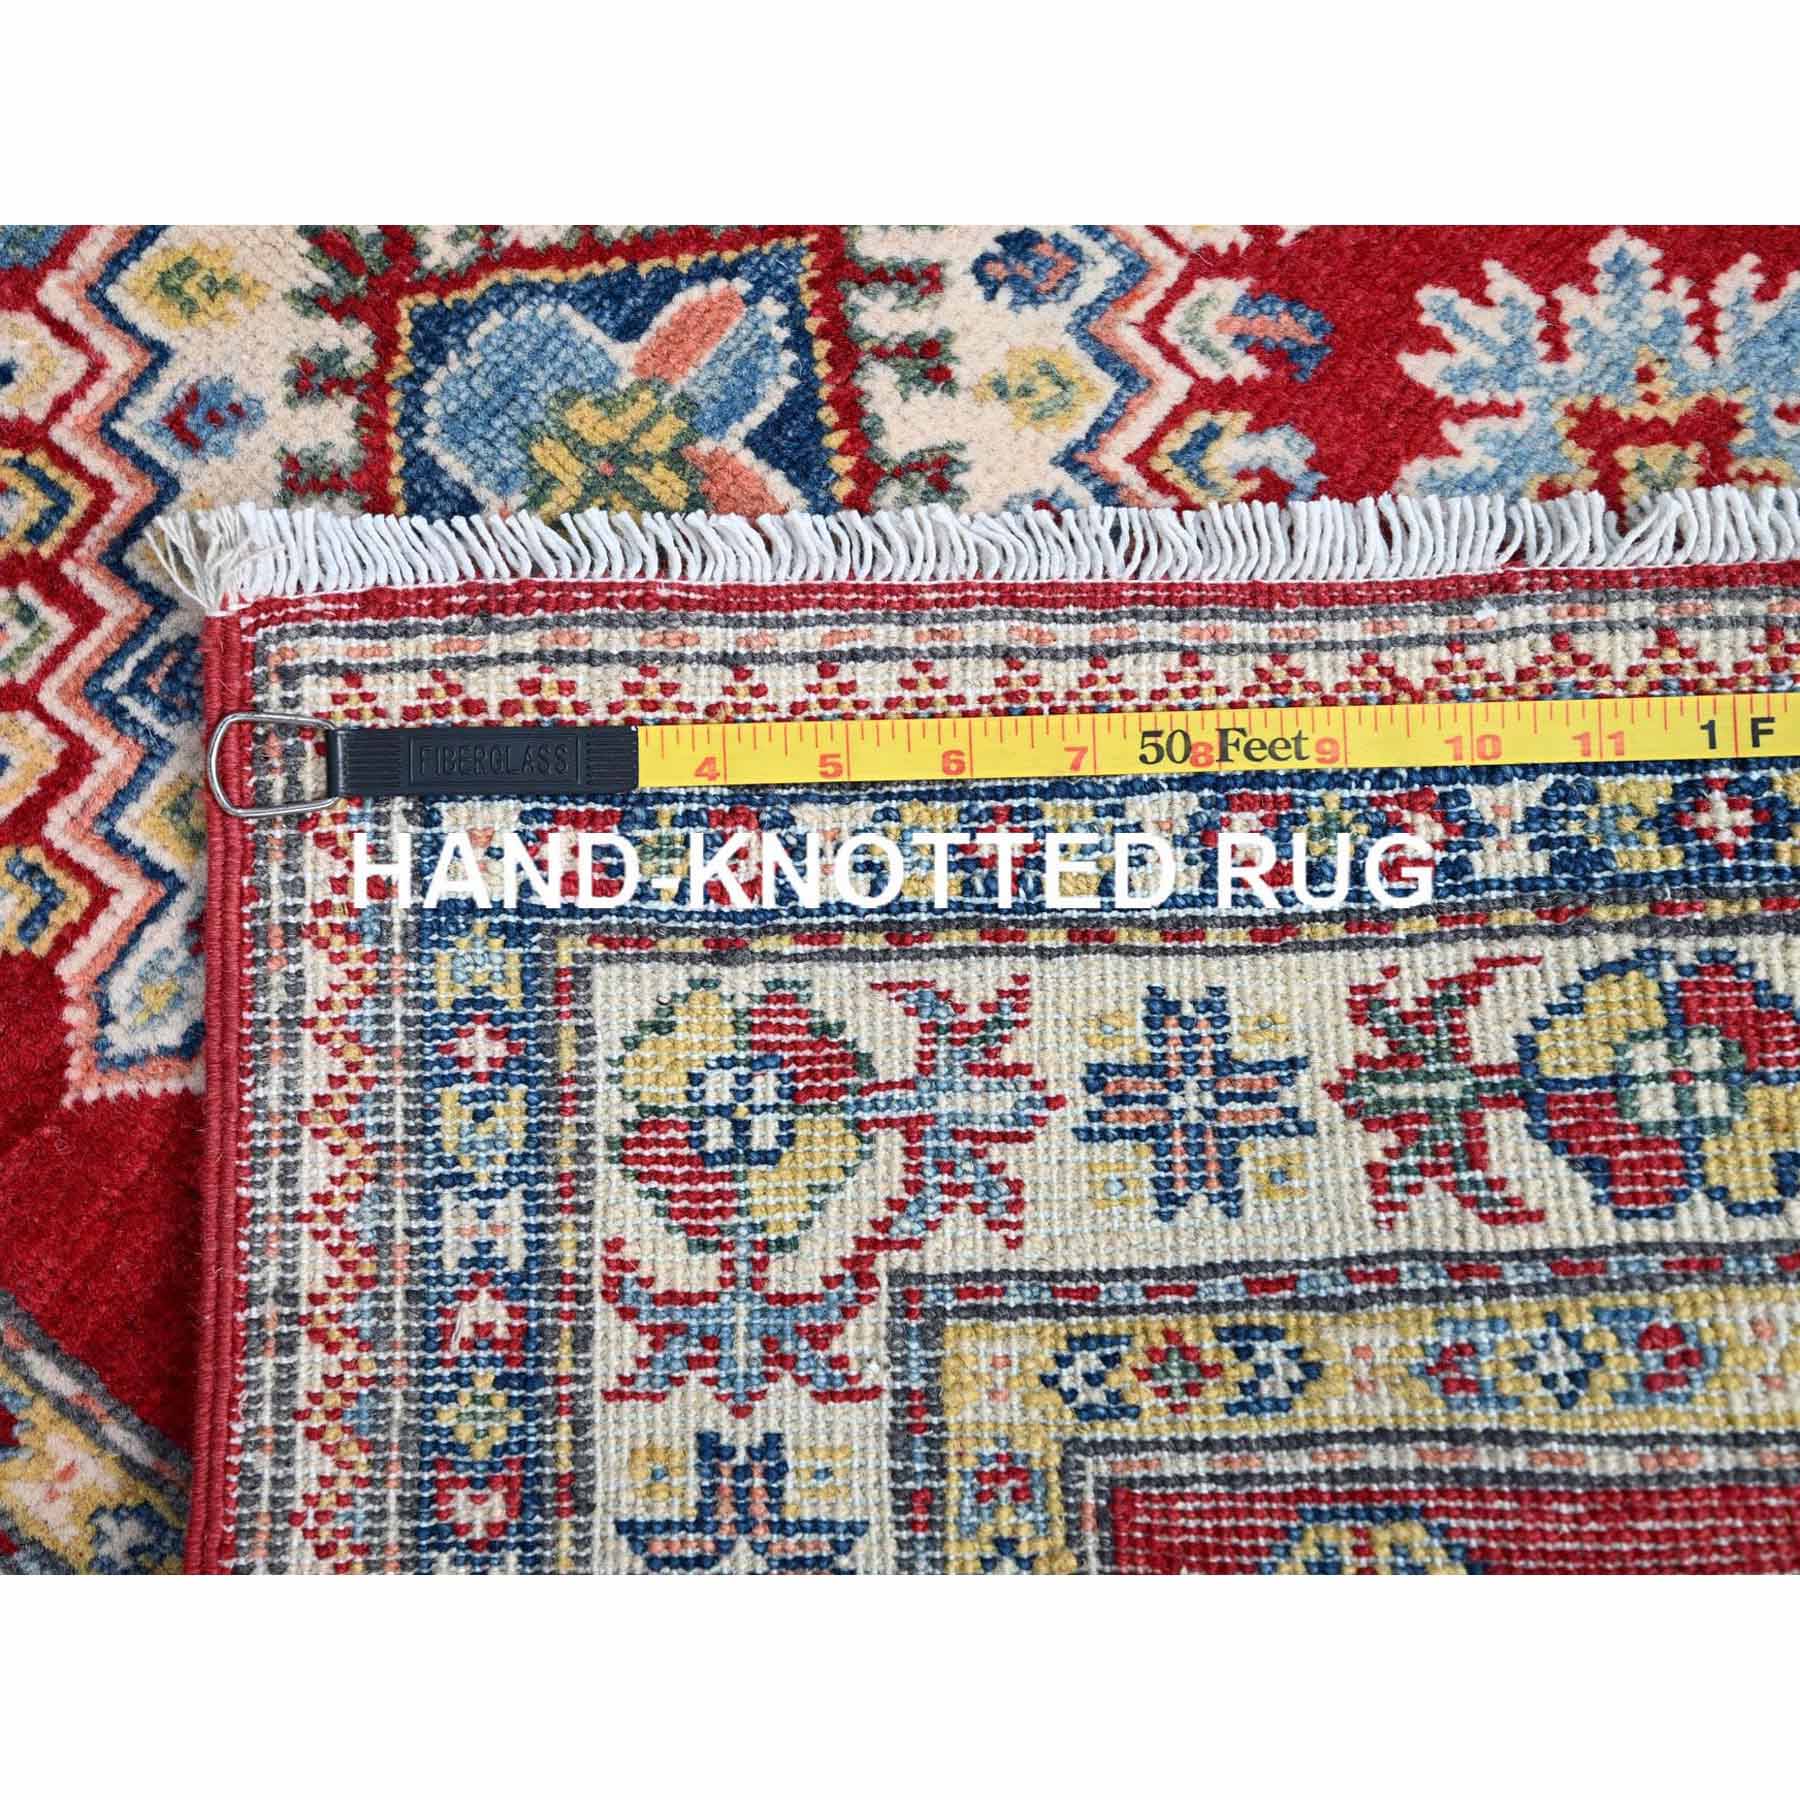 Kazak-Hand-Knotted-Rug-434170